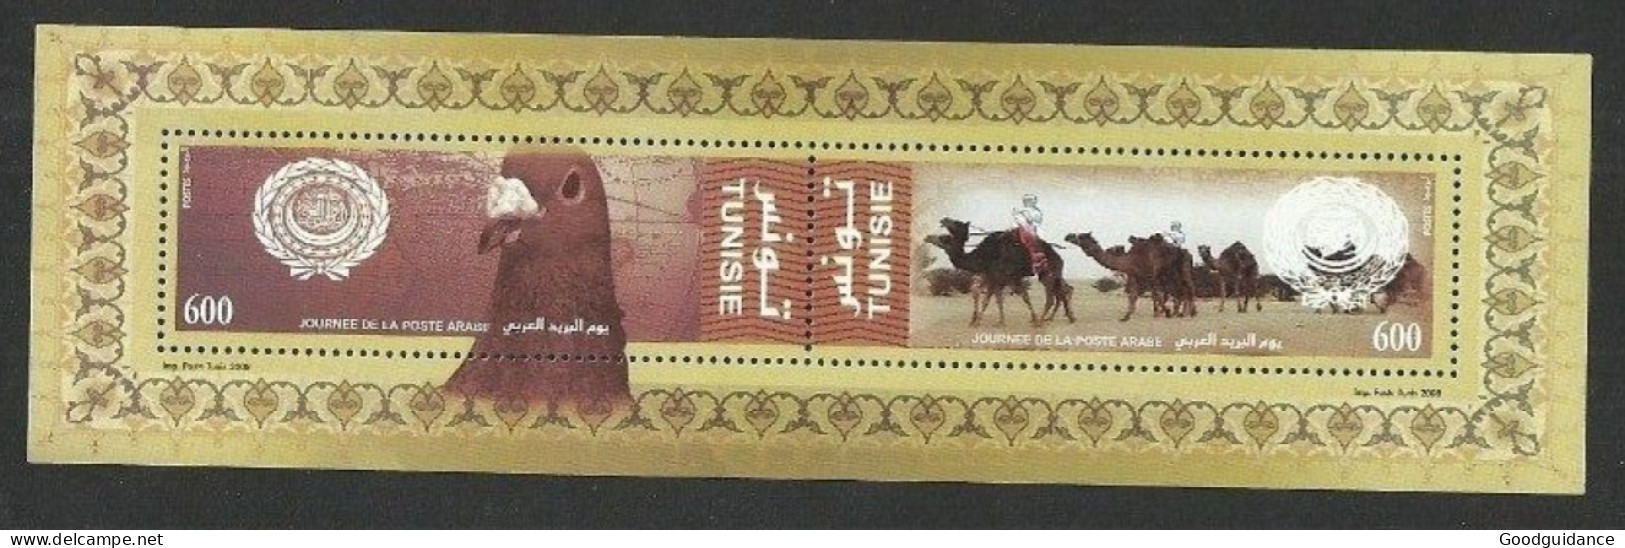 2008- Tunisia-  Minisheet  - Arab Post Day 2008 - Joint Issue - Bird - Camel - Desert - MNH** - Giordania